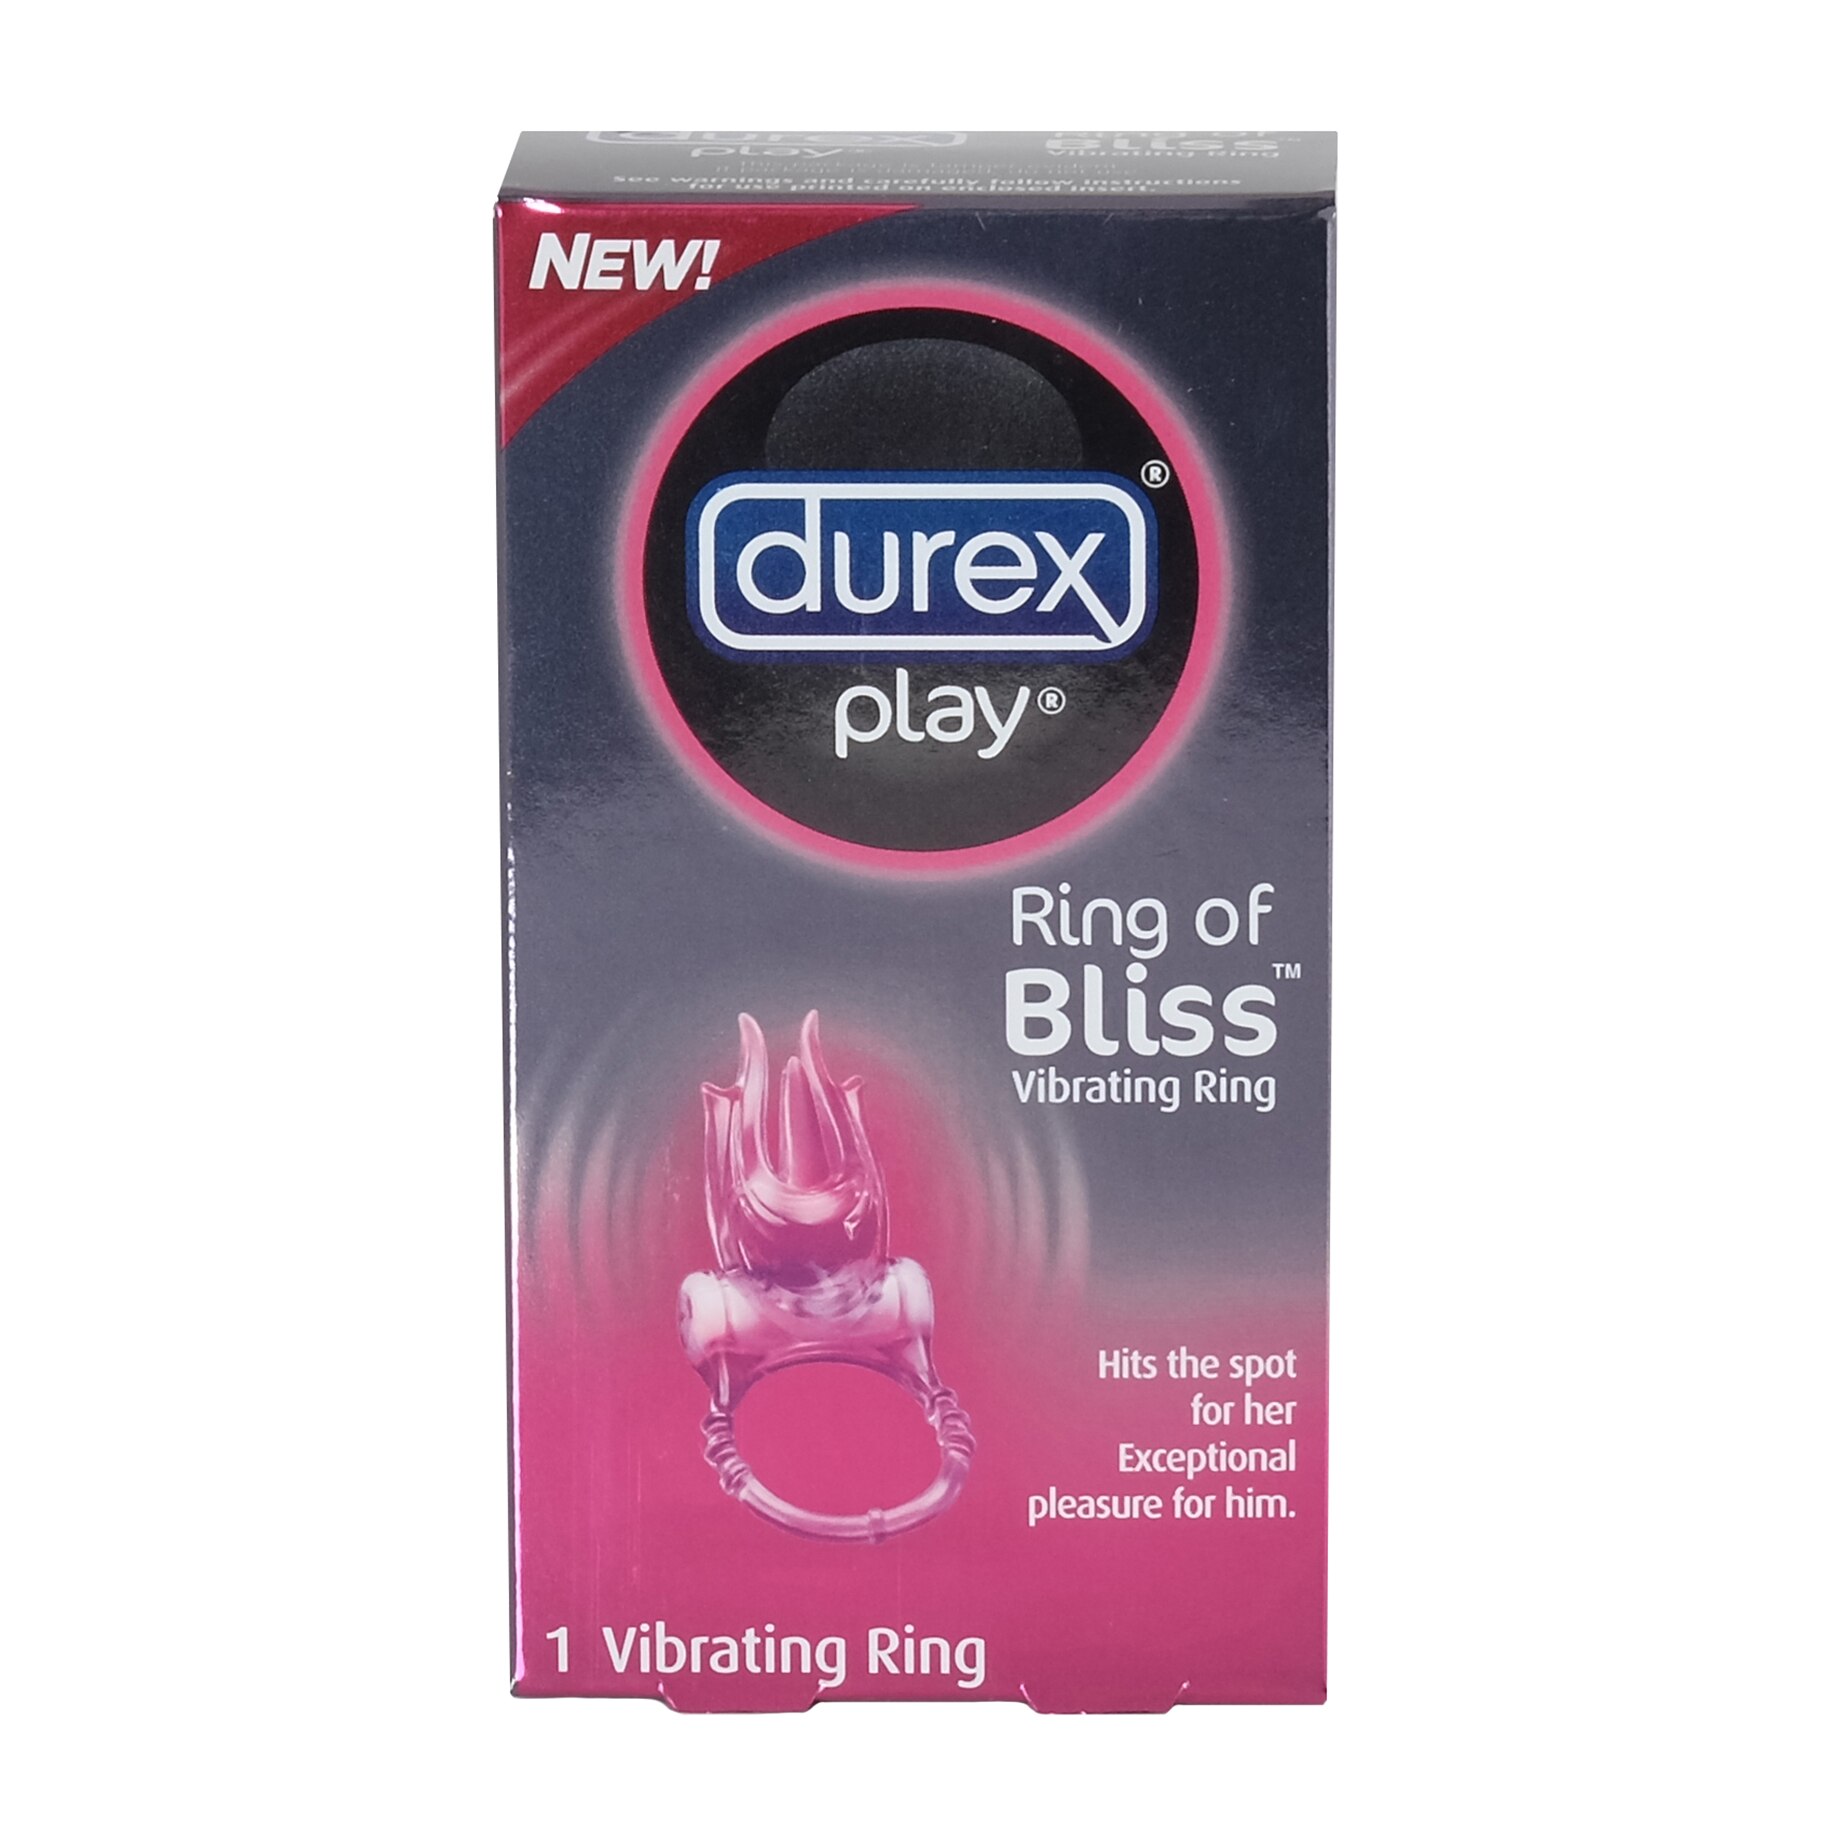 Durex Play Ring of Bliss Vibrating Ring